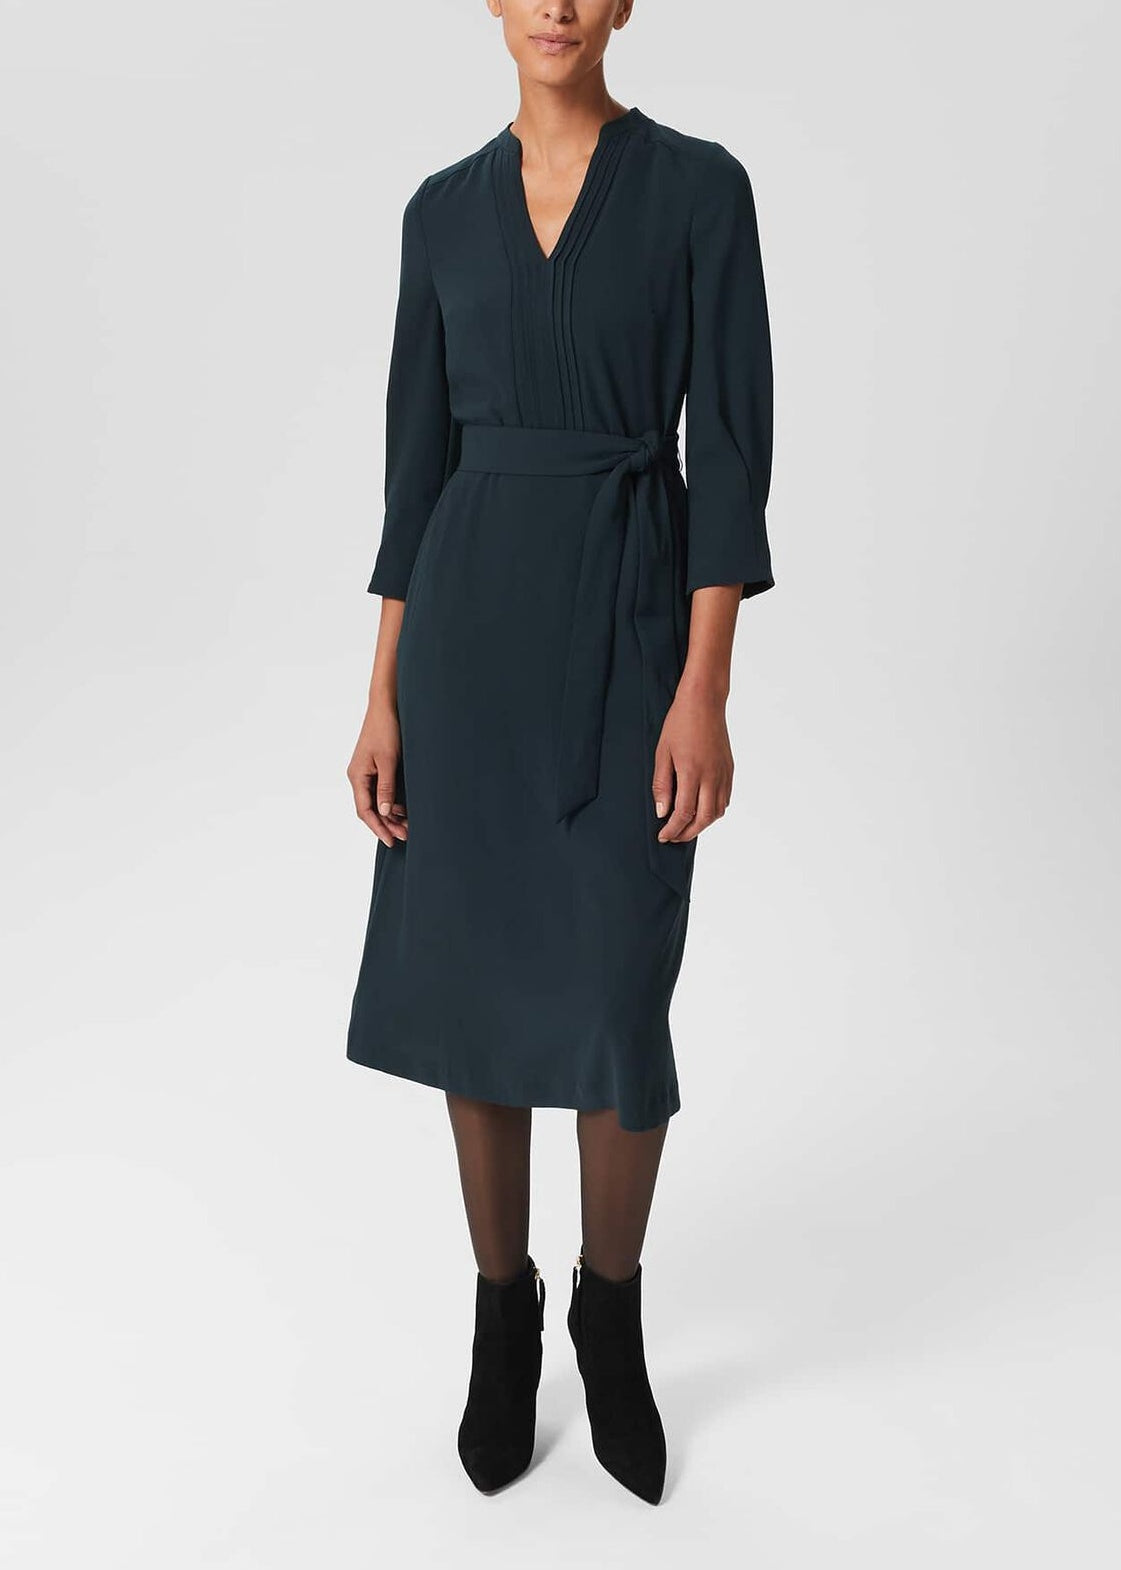 Isobel Dress 0222/5125/9045l00 Dark-Pine-Green